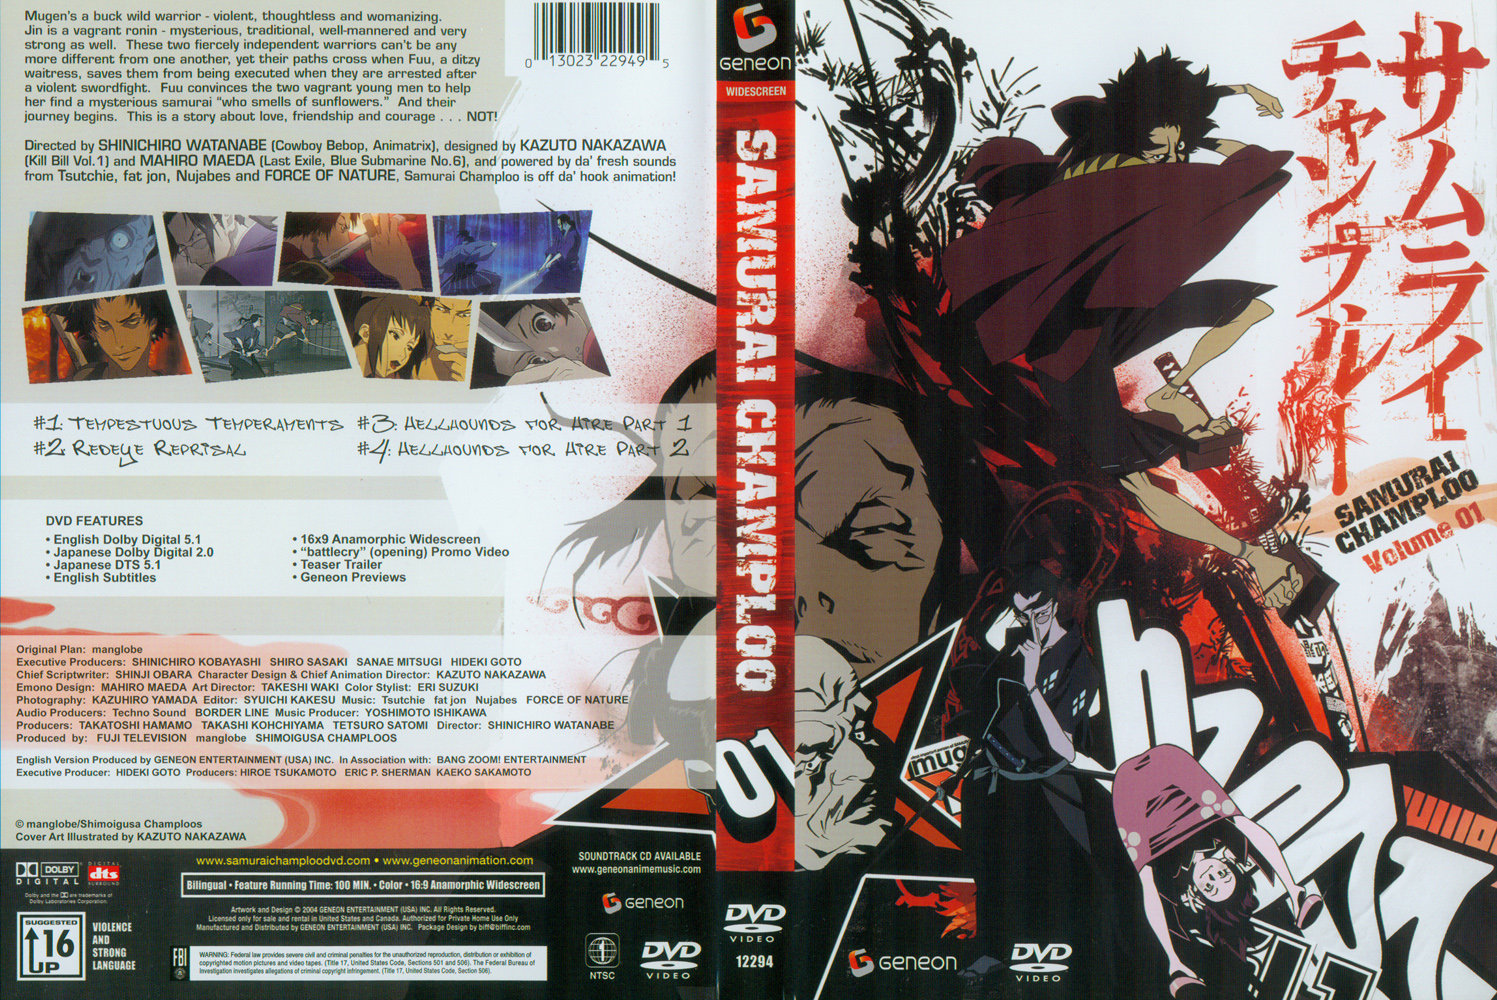 Jaquette DVD Samurai champloo vol 01 Zone 1